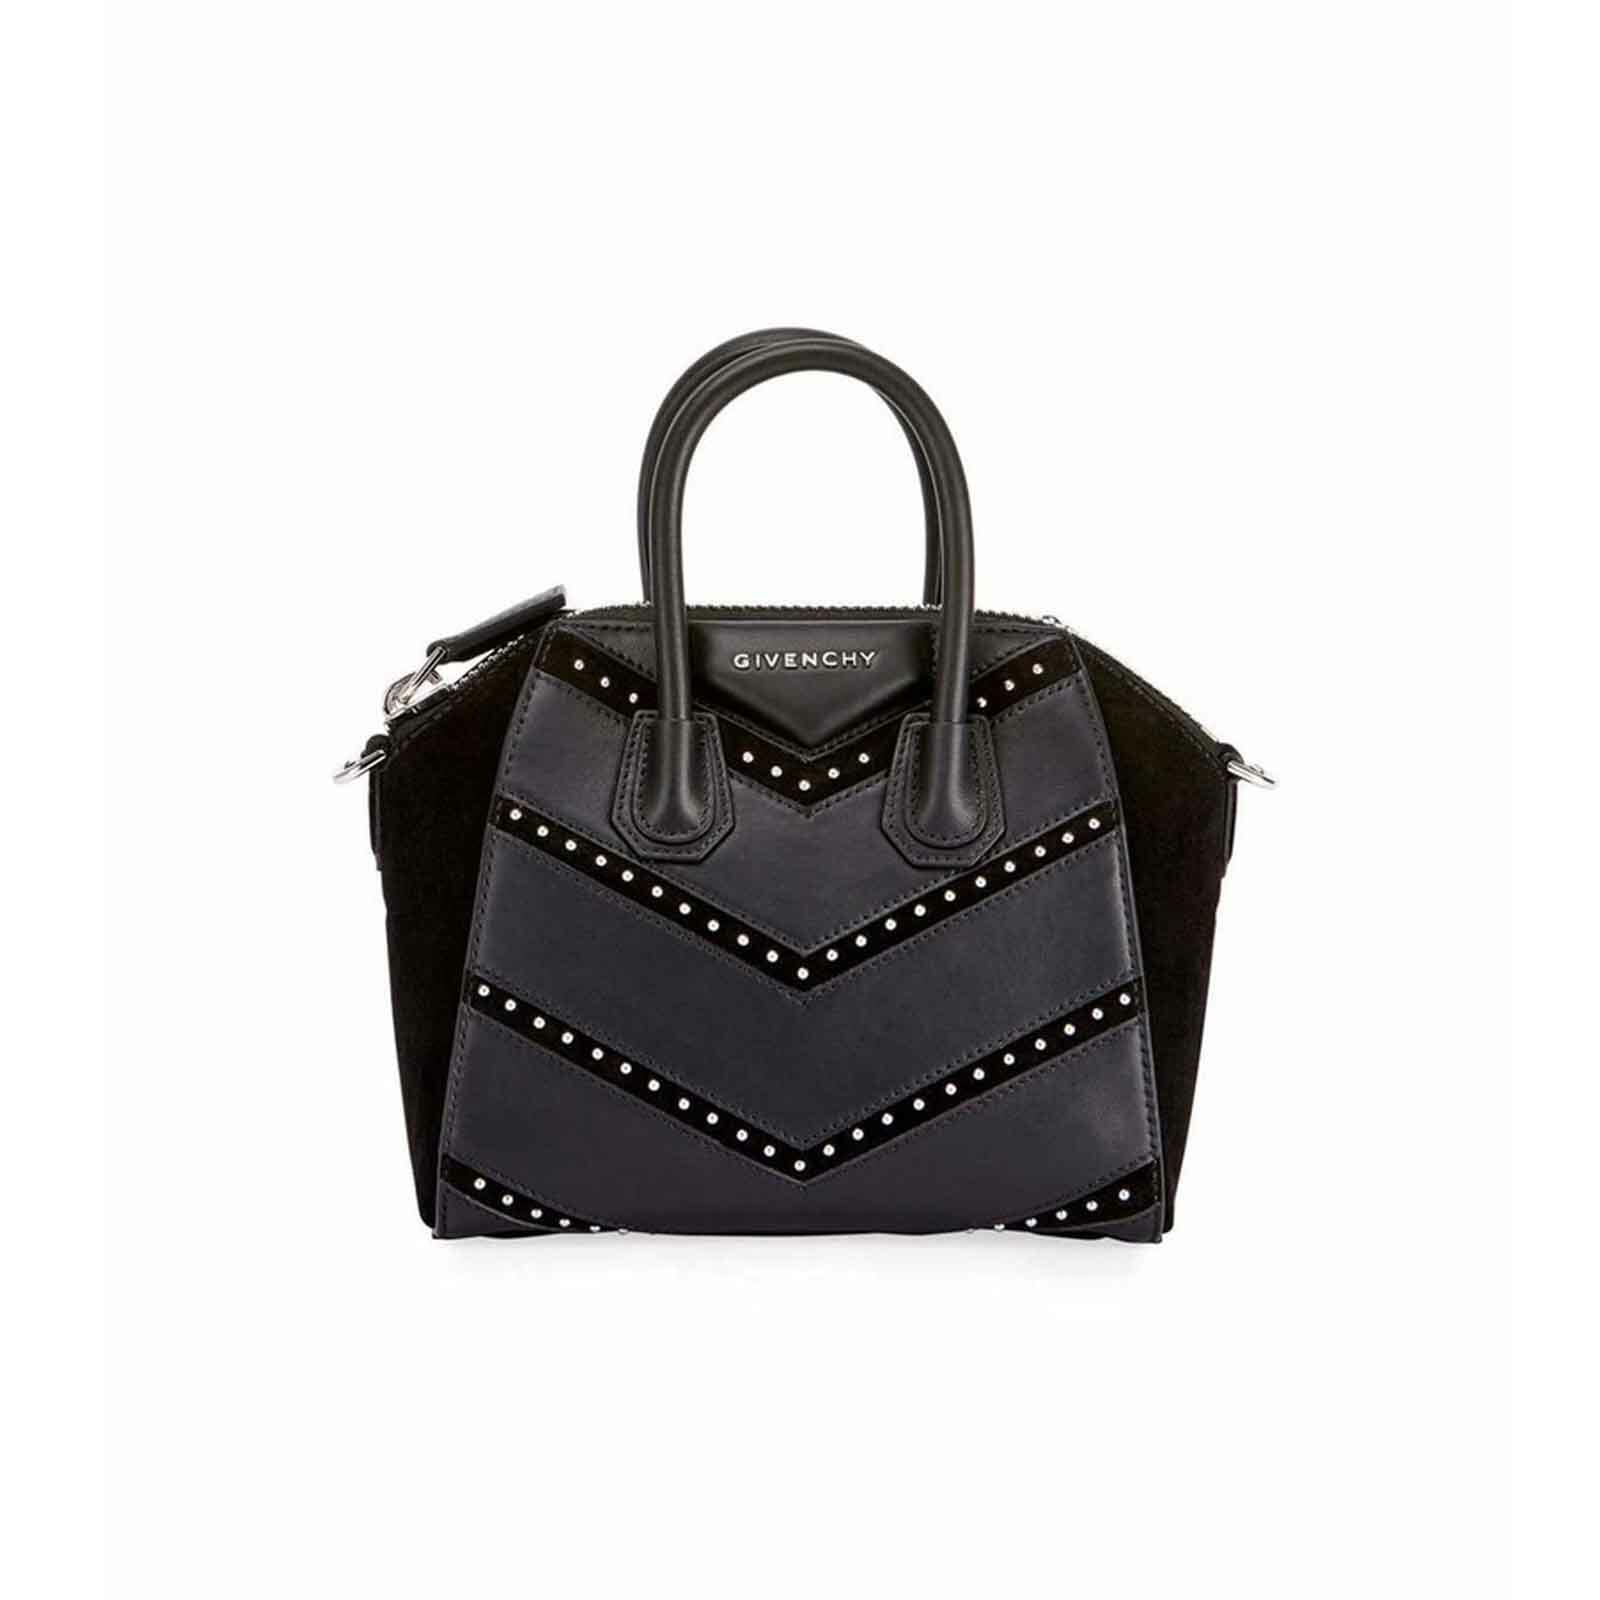 Authentic Designer Handbags - Handbagholic